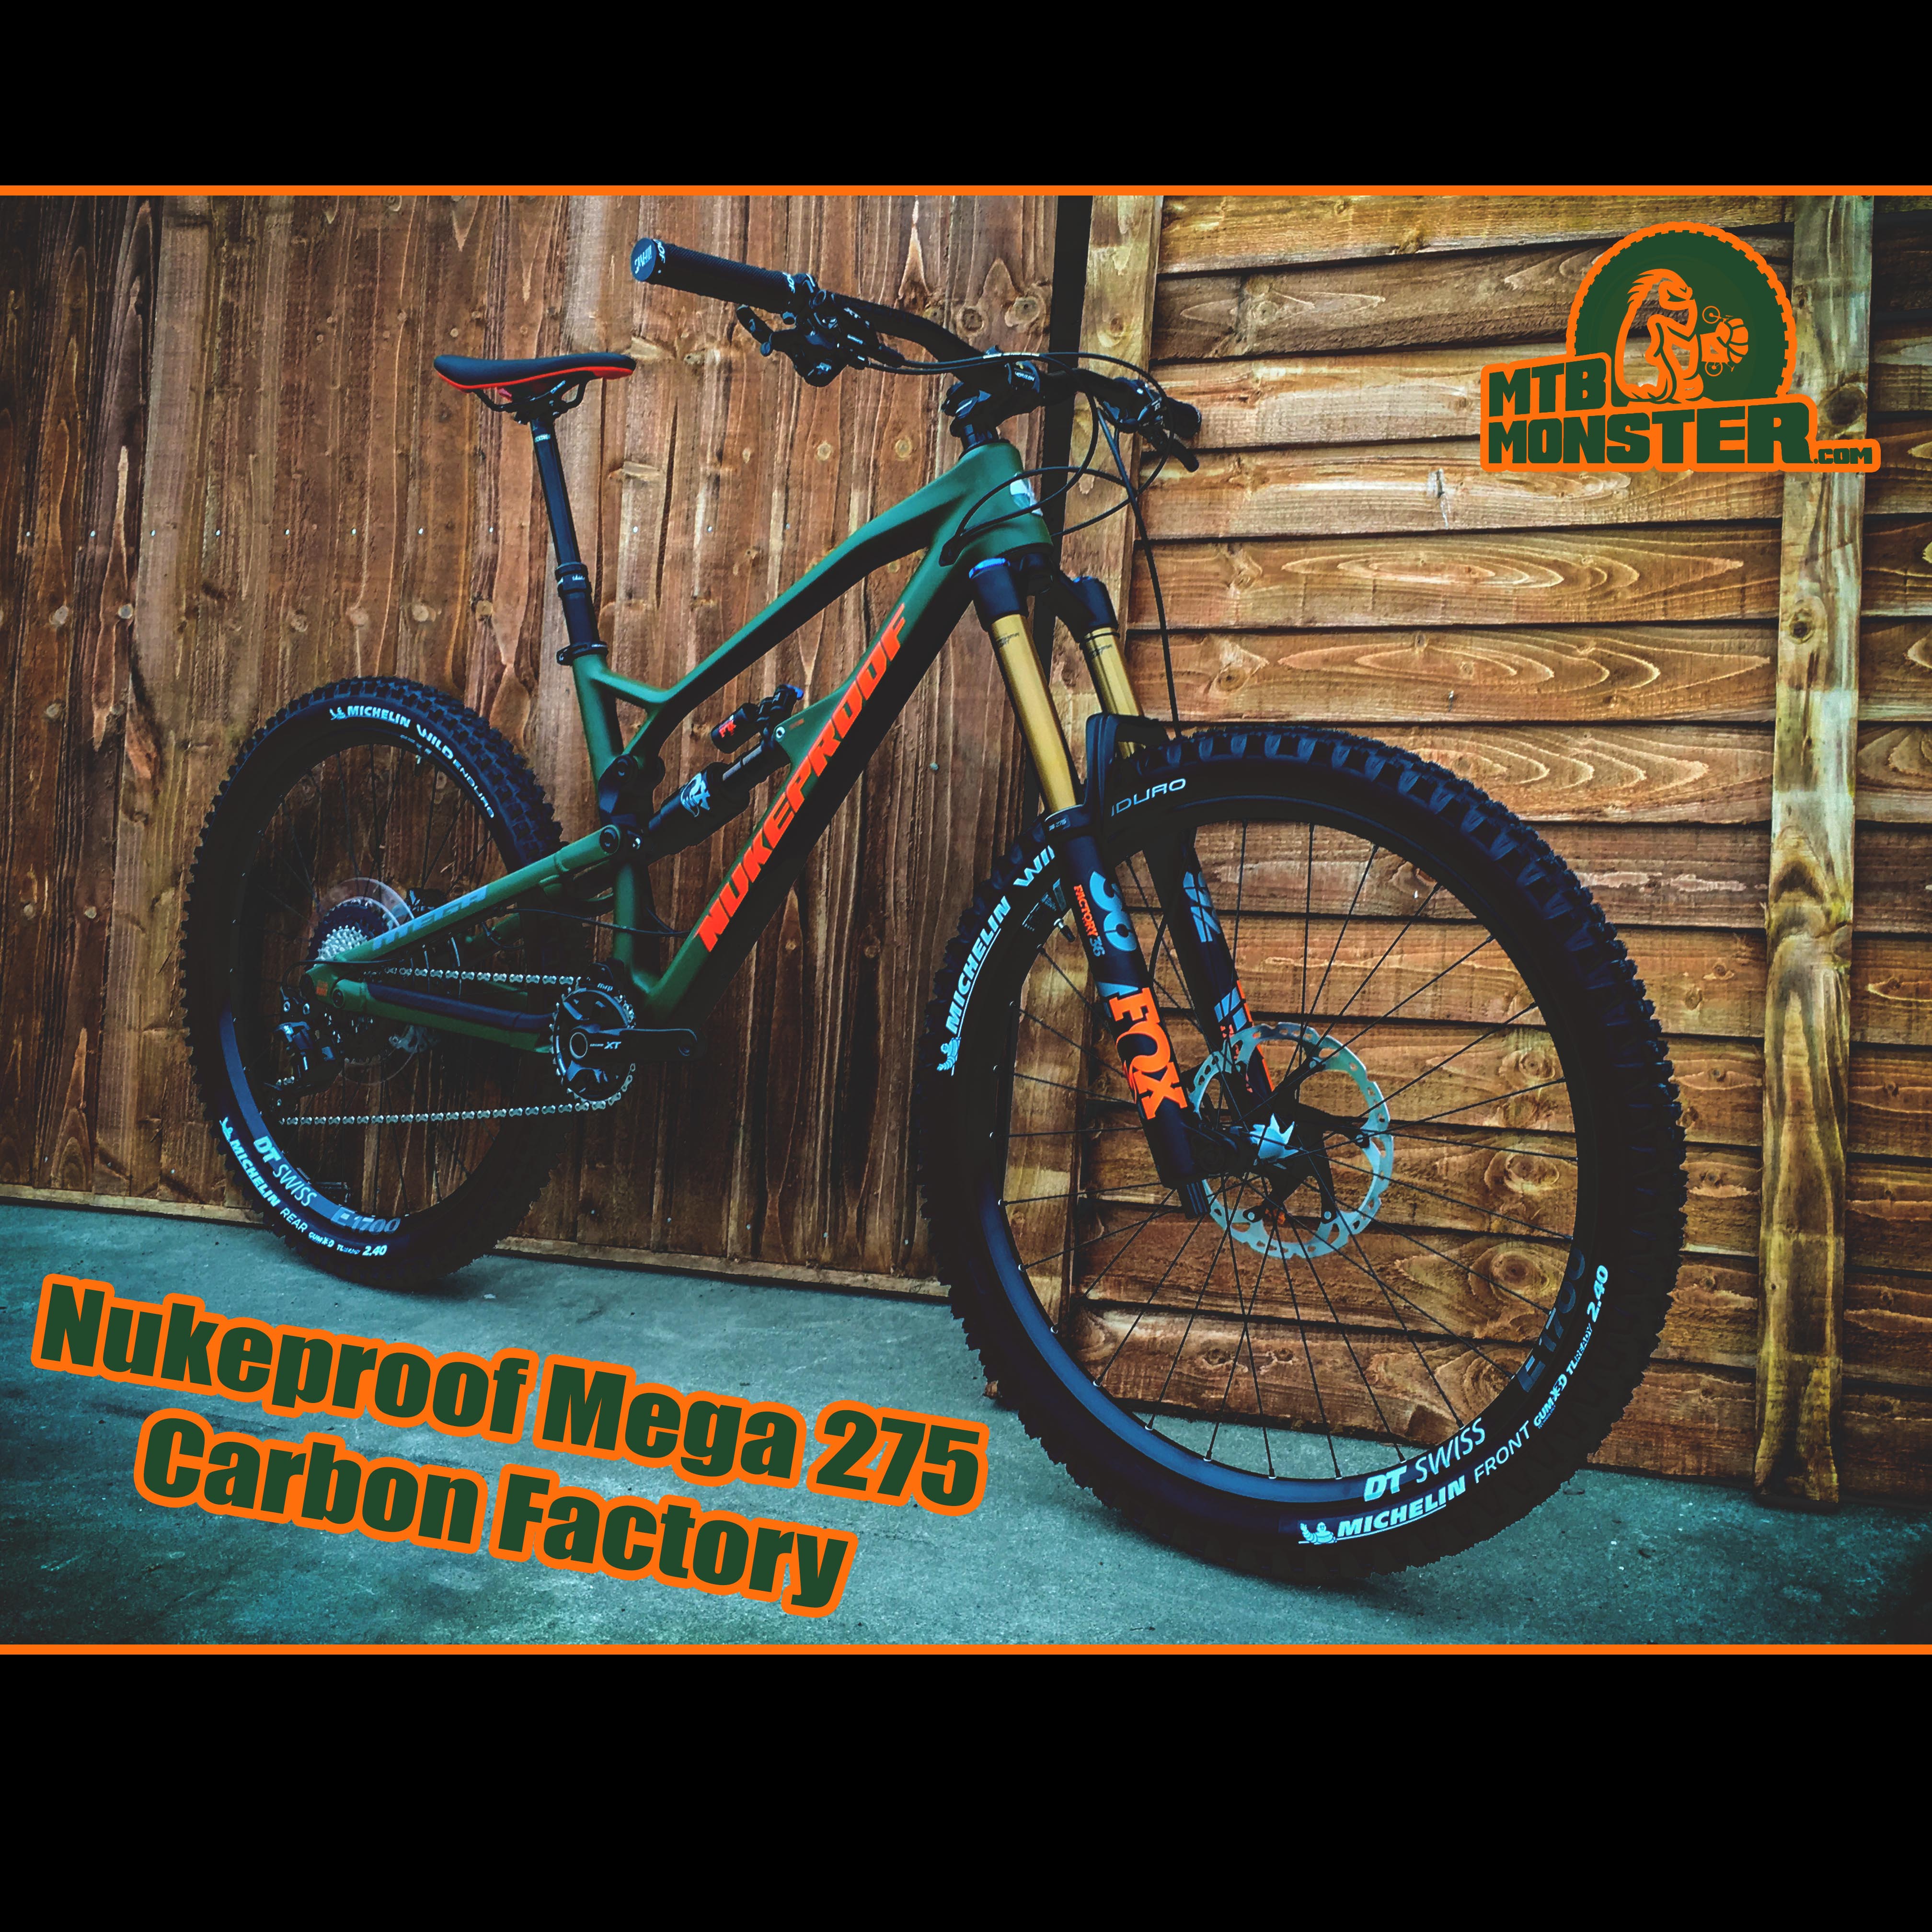 nukeproof mega 275 carbon factory bike